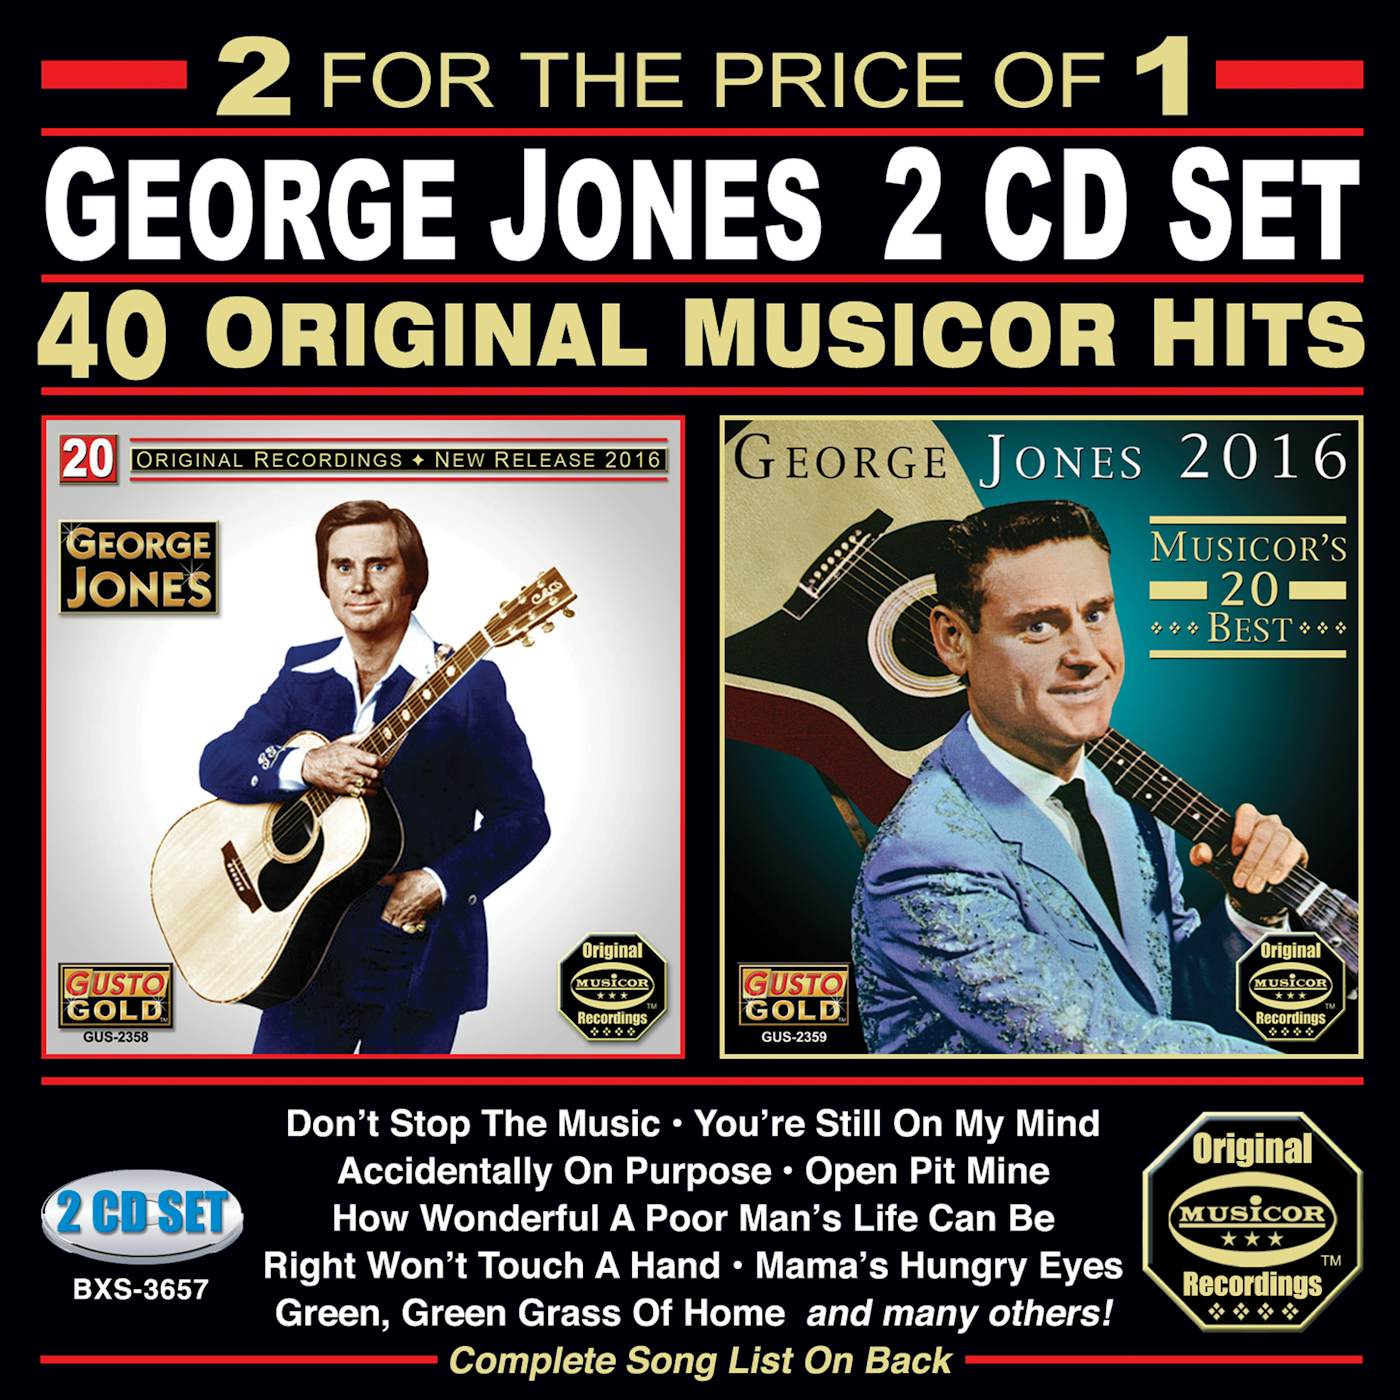 George Jones 40 ORIGINAL MUSICOR HITS CD